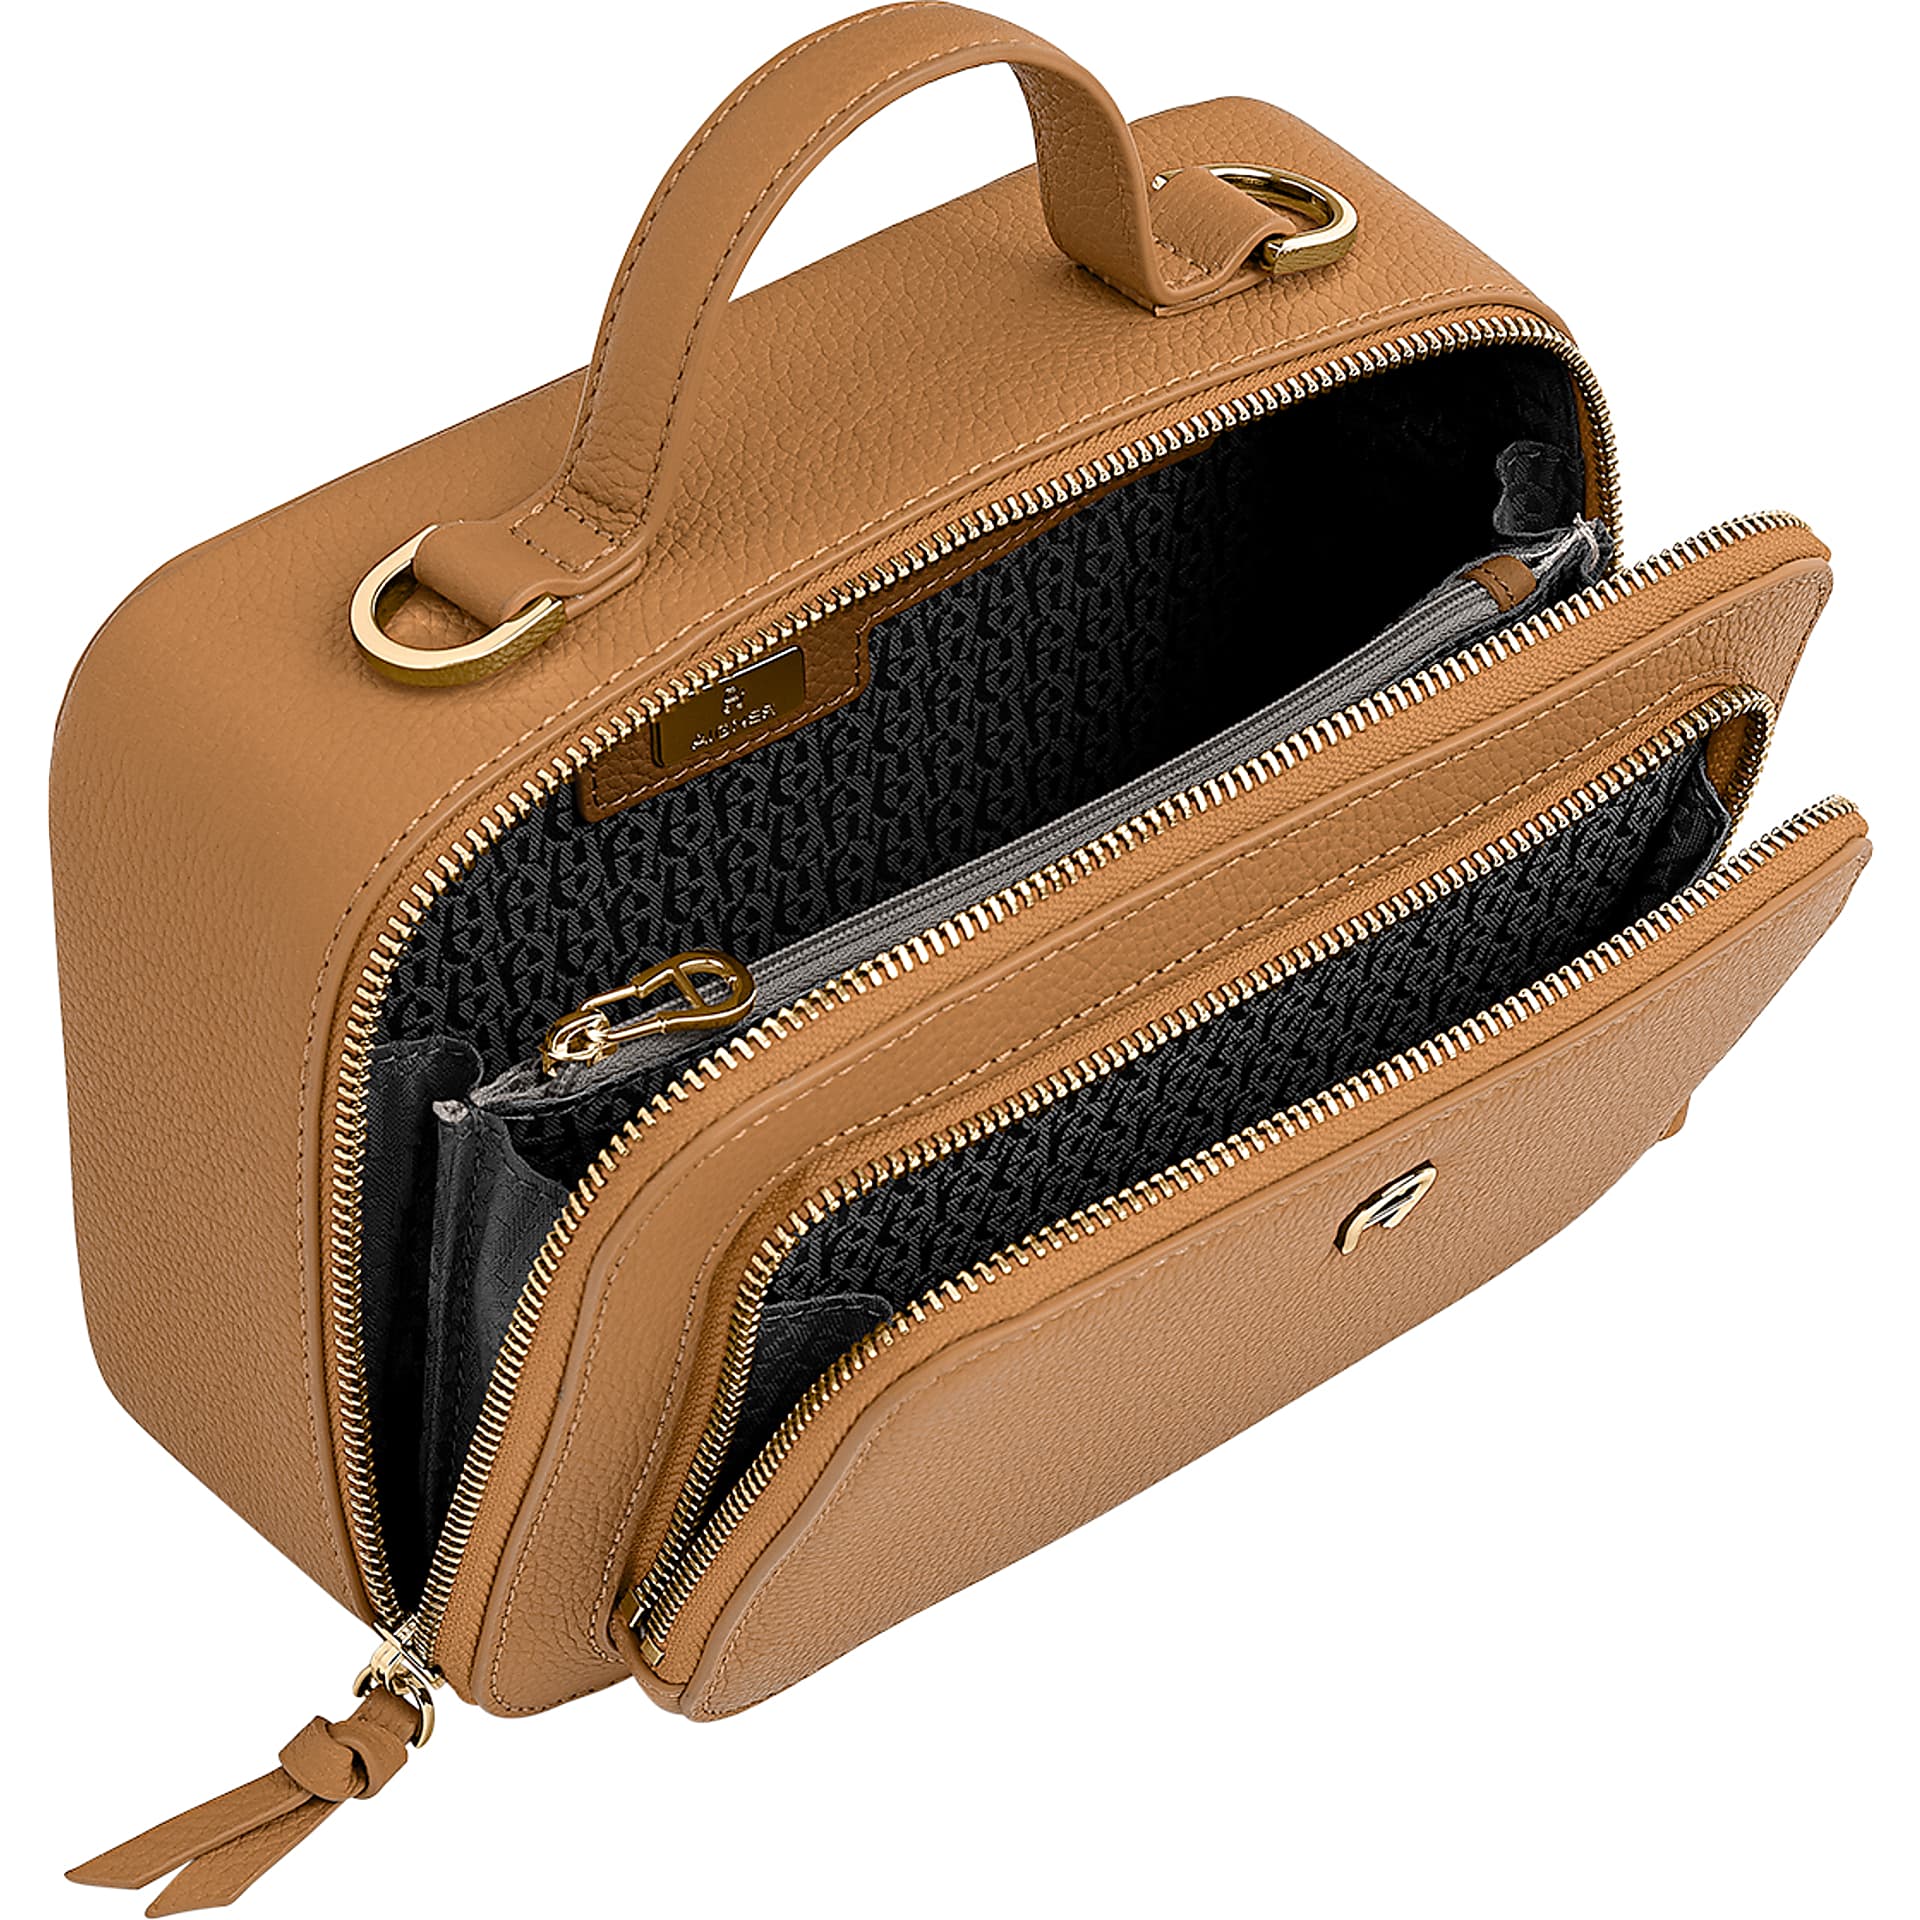 Zita Shoulder Bag S maple brown - Bags - Women - AIGNER Club